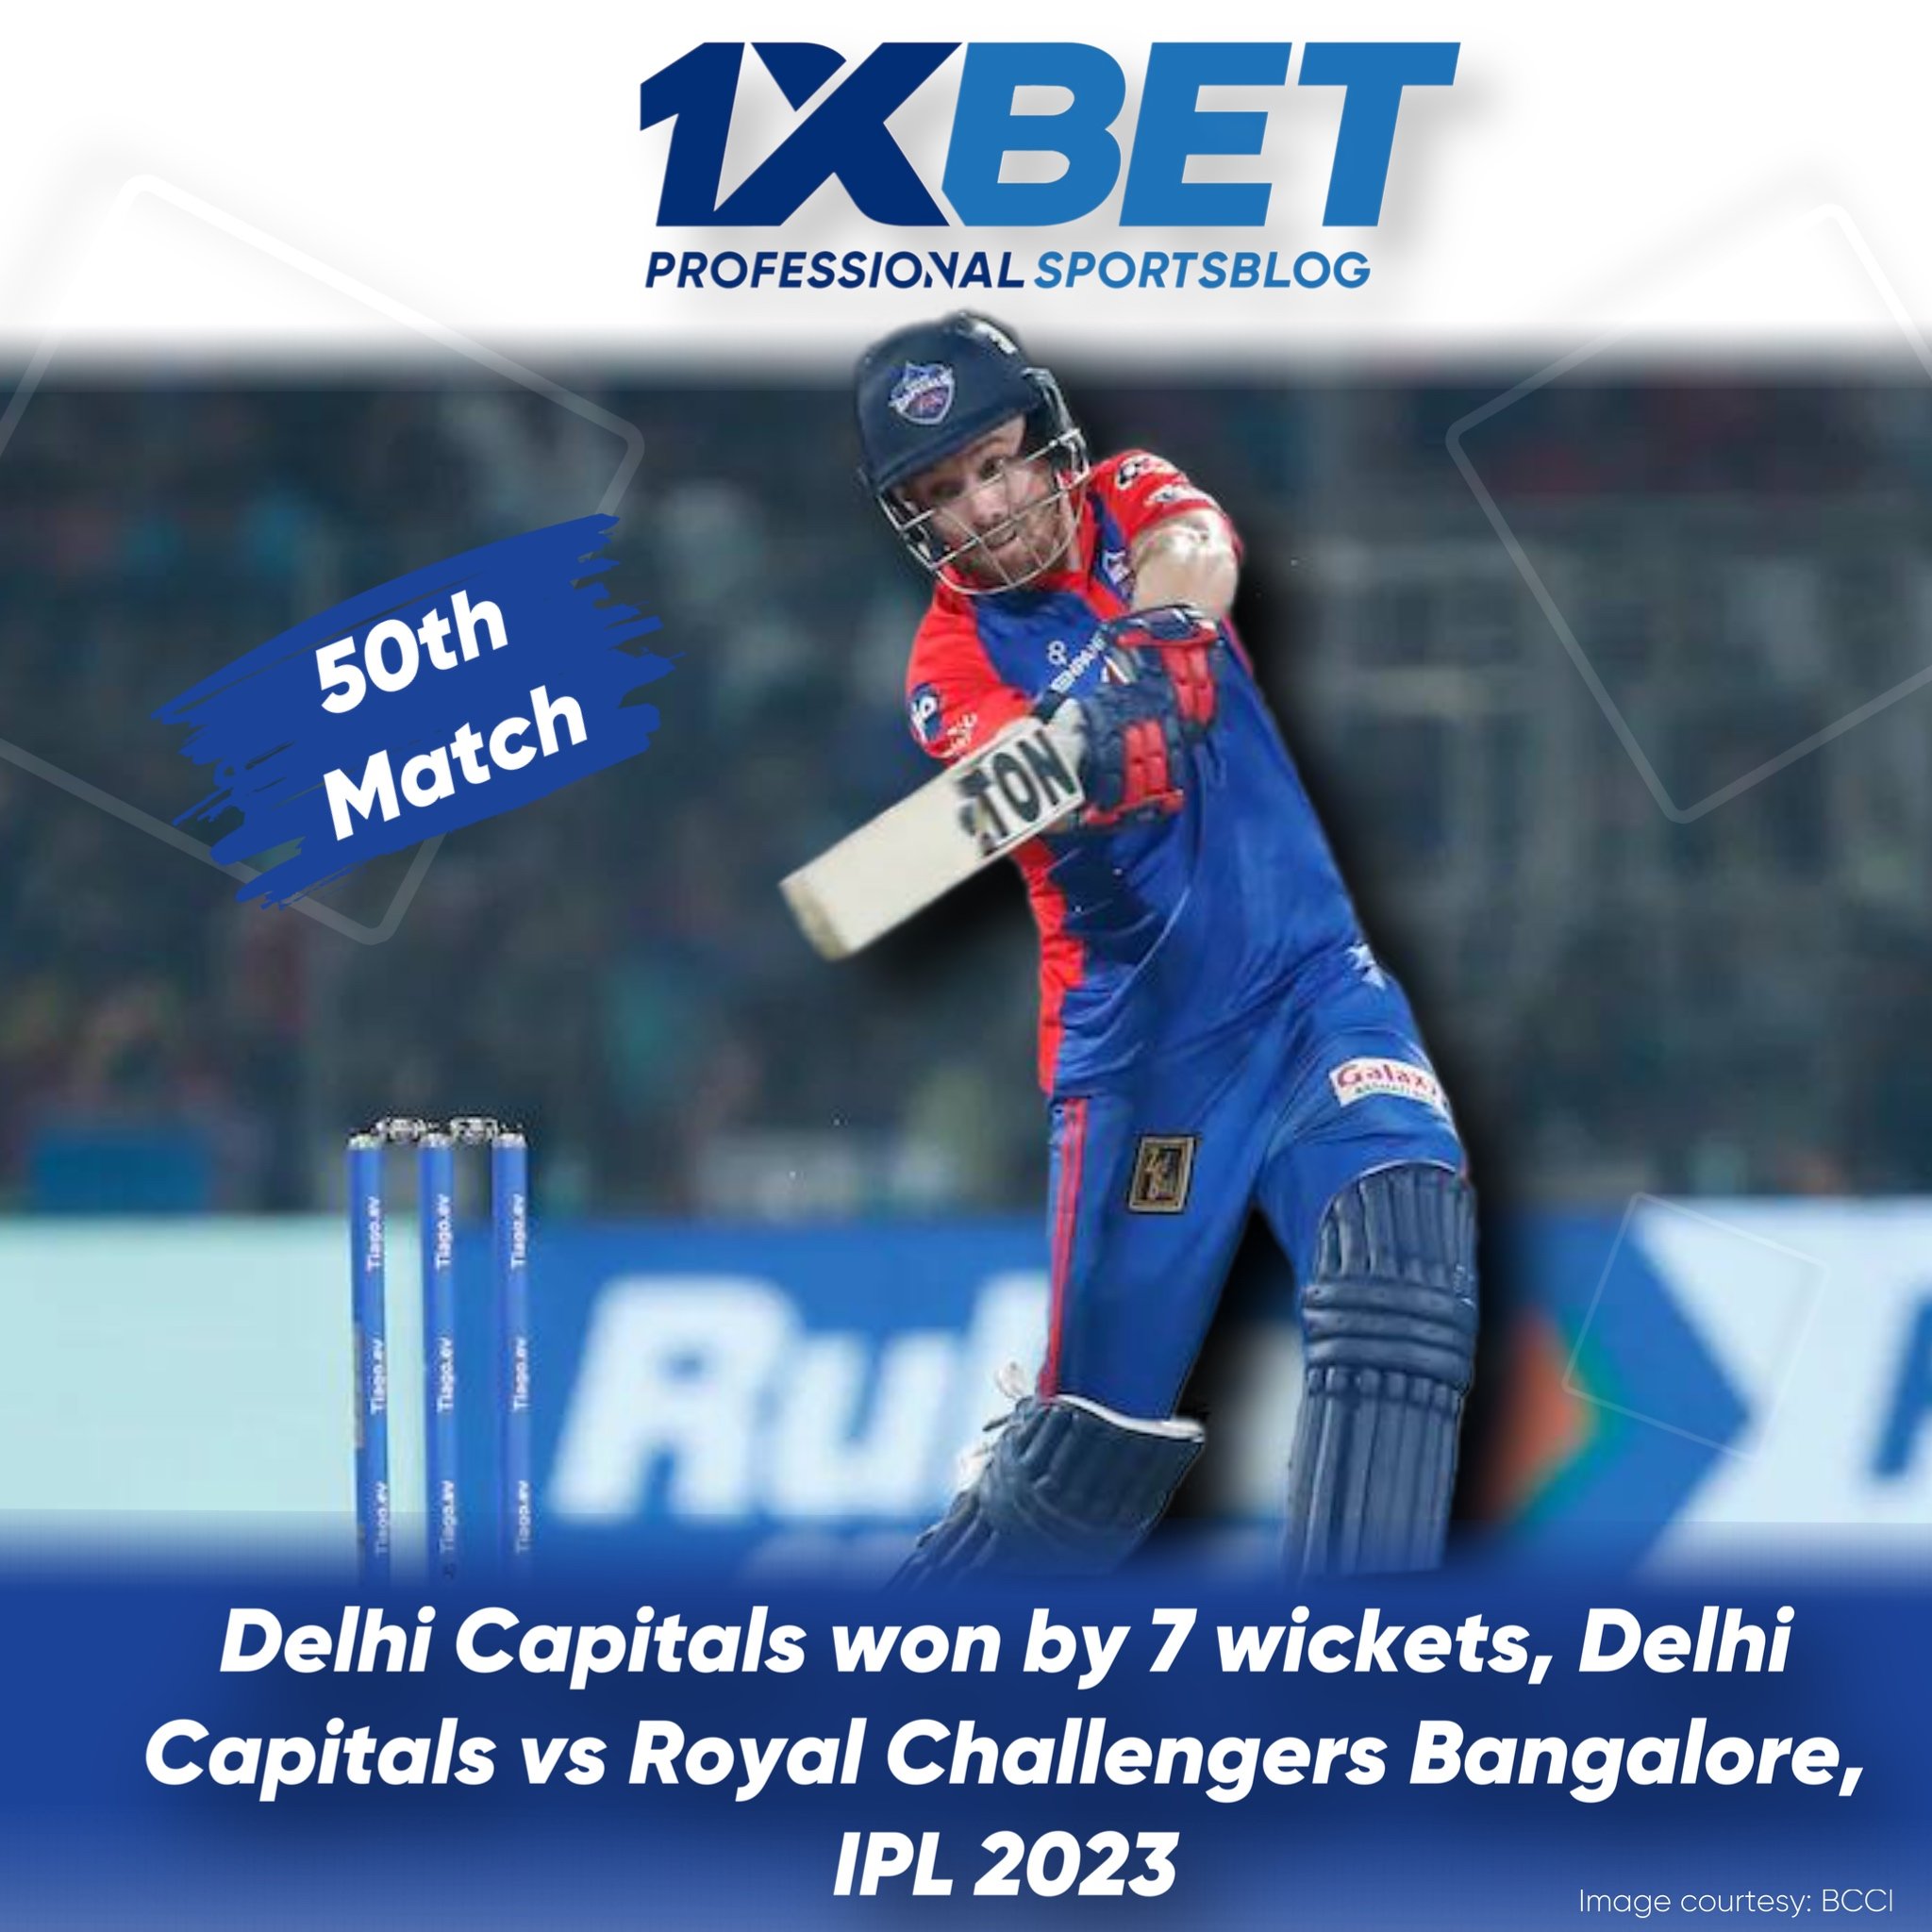 Delhi Capitals won by 7 wickets